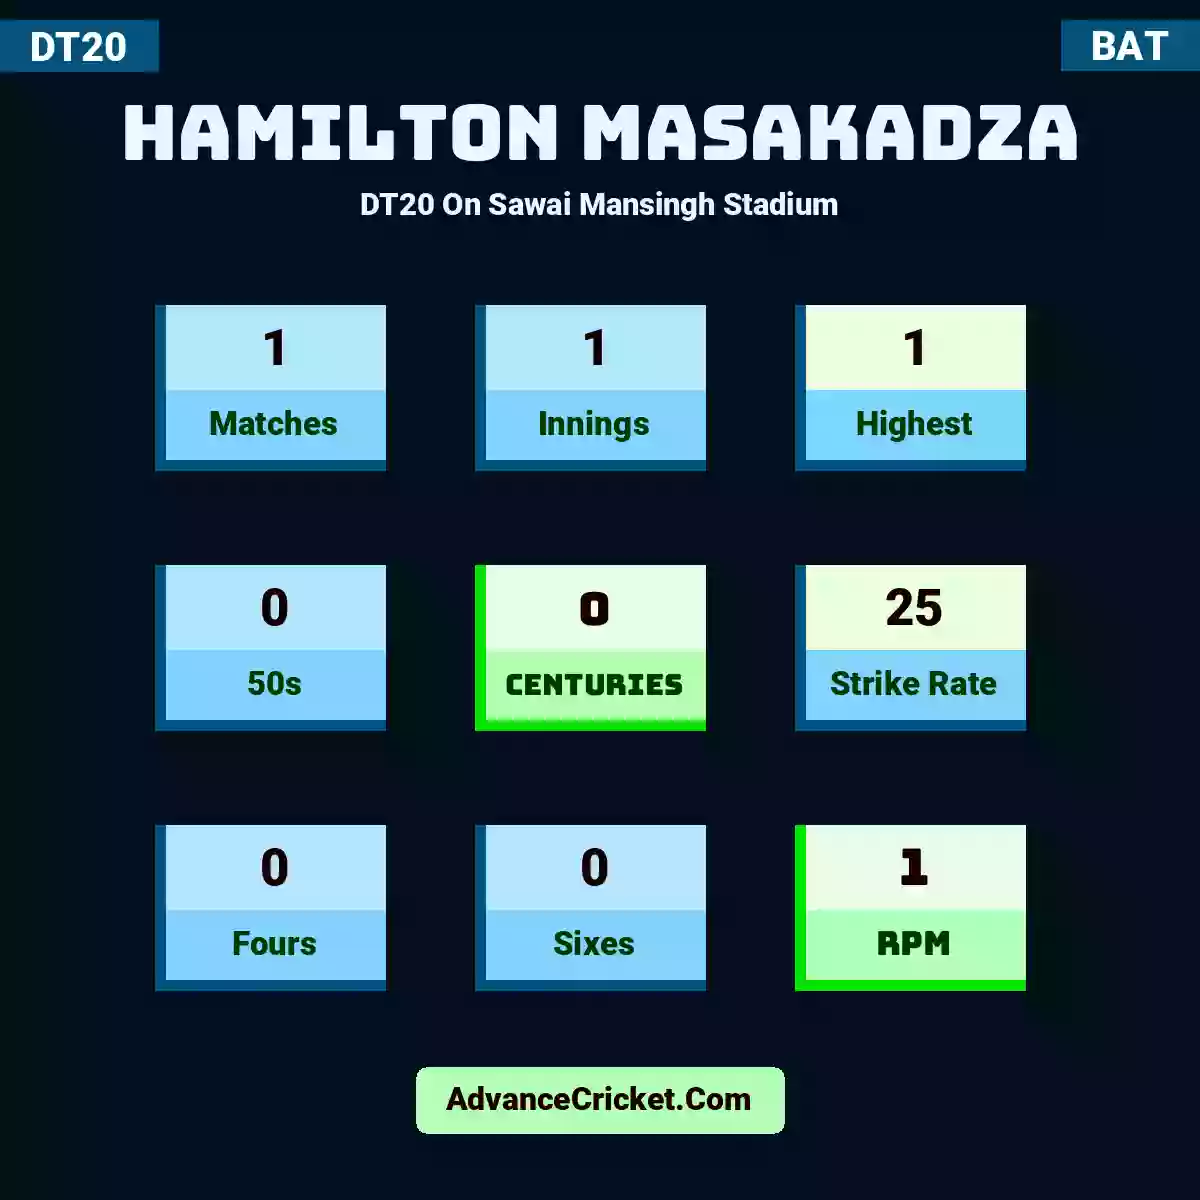 Hamilton Masakadza DT20  On Sawai Mansingh Stadium, Hamilton Masakadza played 1 matches, scored 1 runs as highest, 0 half-centuries, and 0 centuries, with a strike rate of 25. H.Masakadza hit 0 fours and 0 sixes, with an RPM of 1.